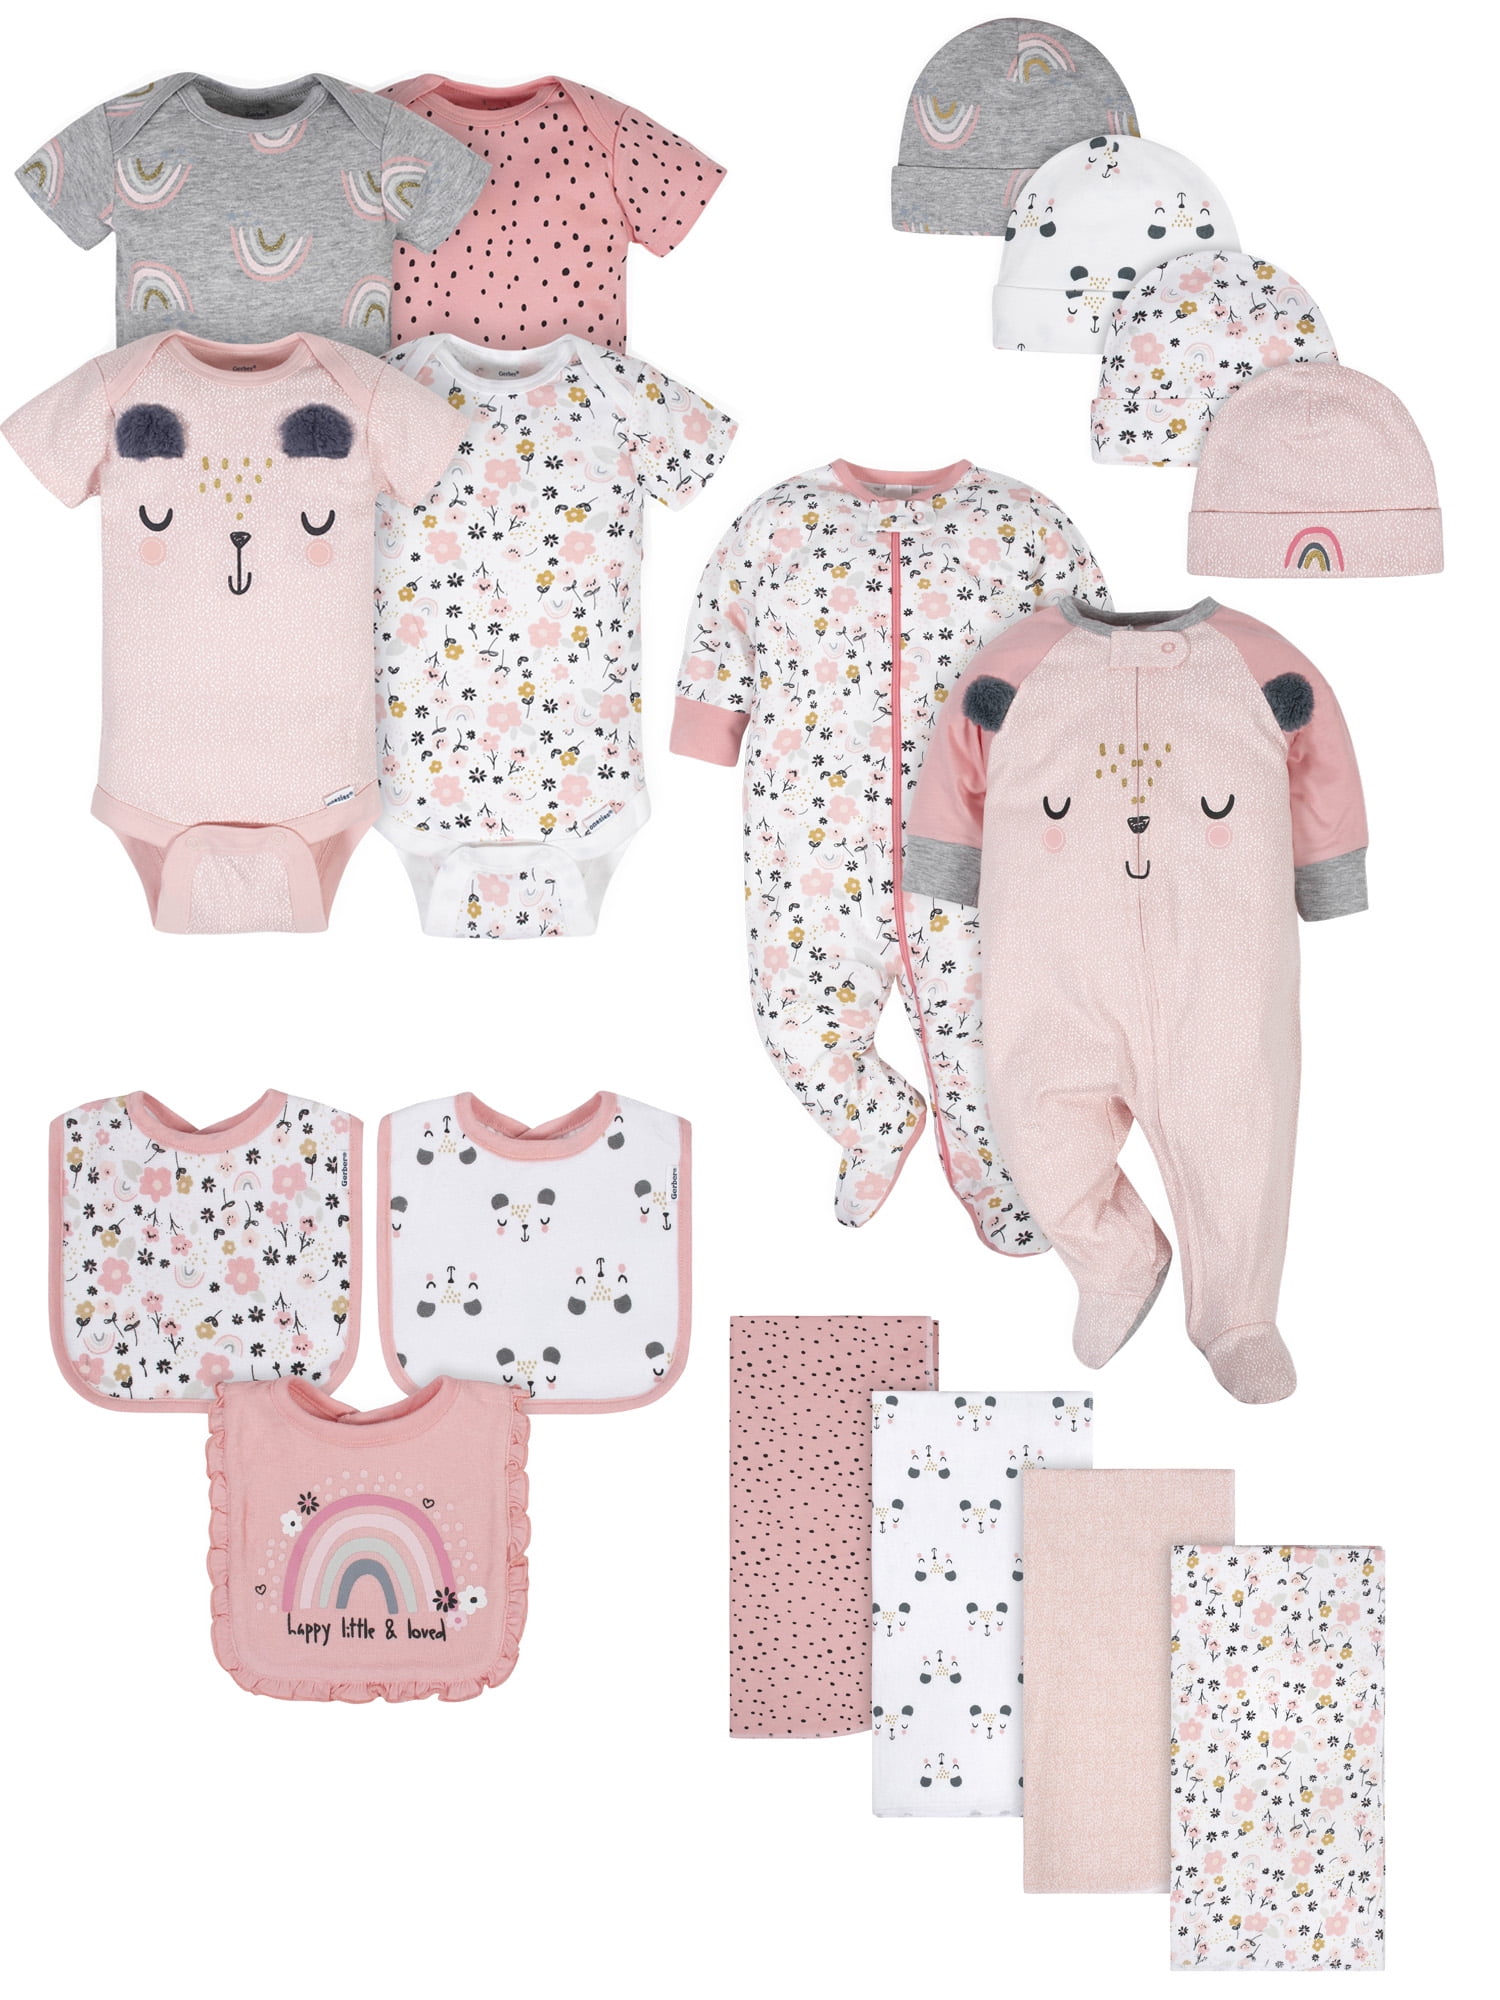 Gerber Baby Girls 2 Pack Hooded Towels Bear & Dots Design NEW Shower Gift Cute